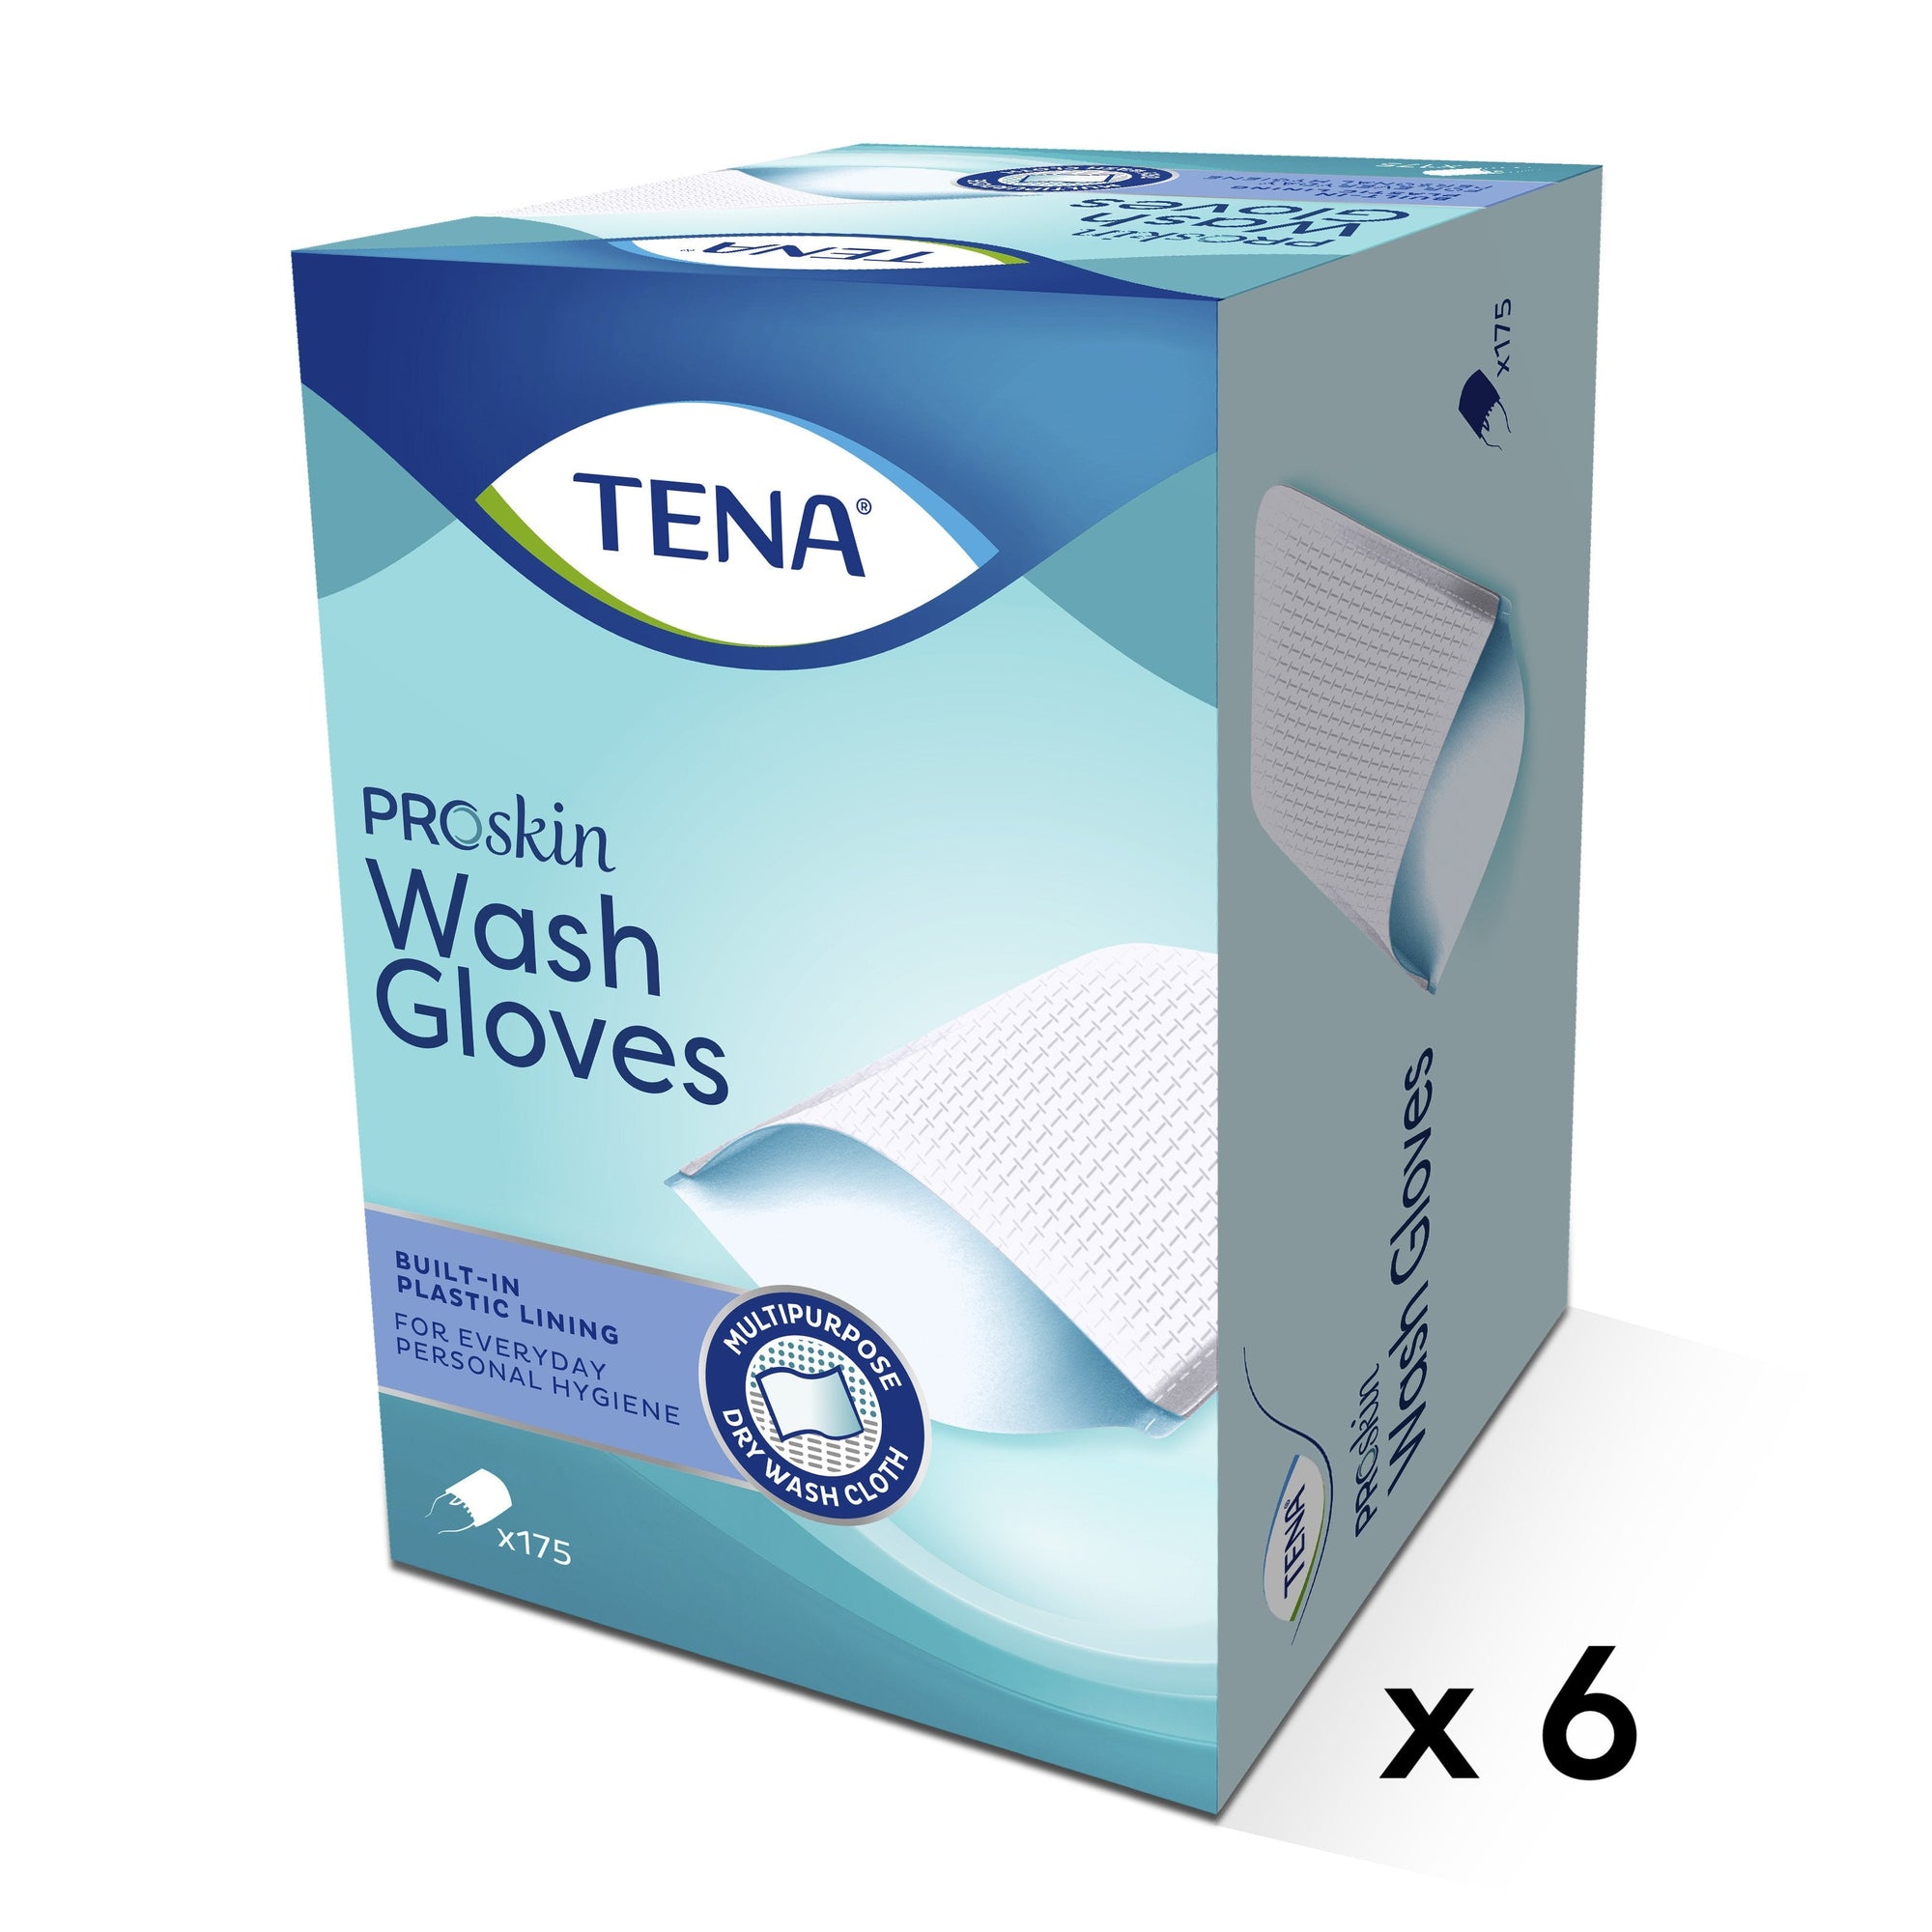 TENA PROskin Wash Gloves 175s